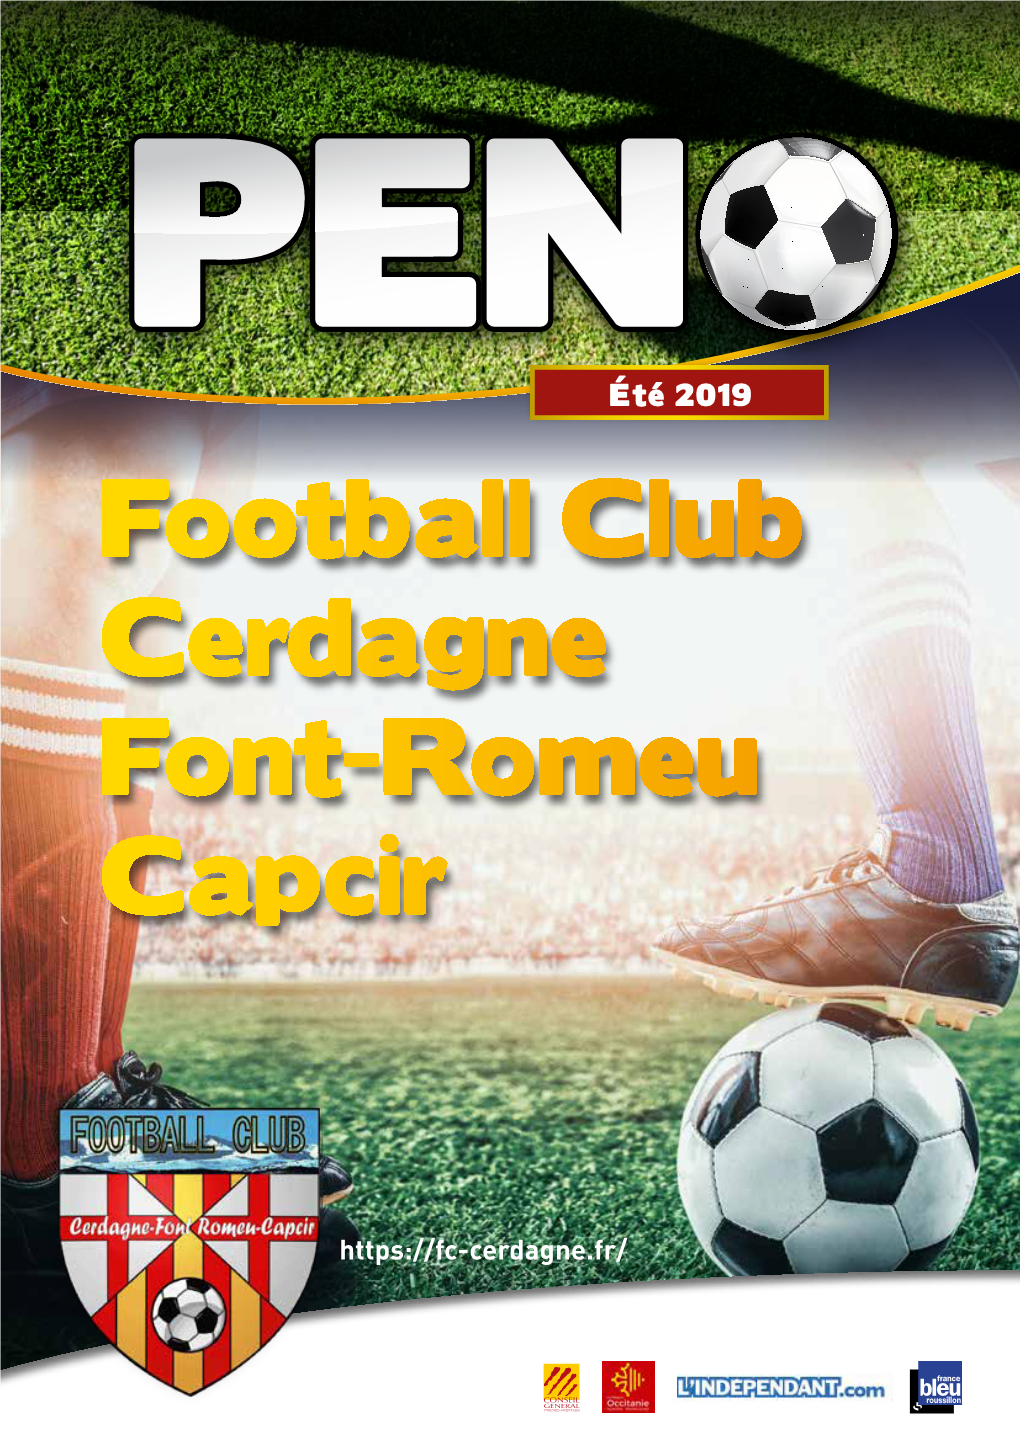 Football Club Cerdagne Font-Romeu Capcir